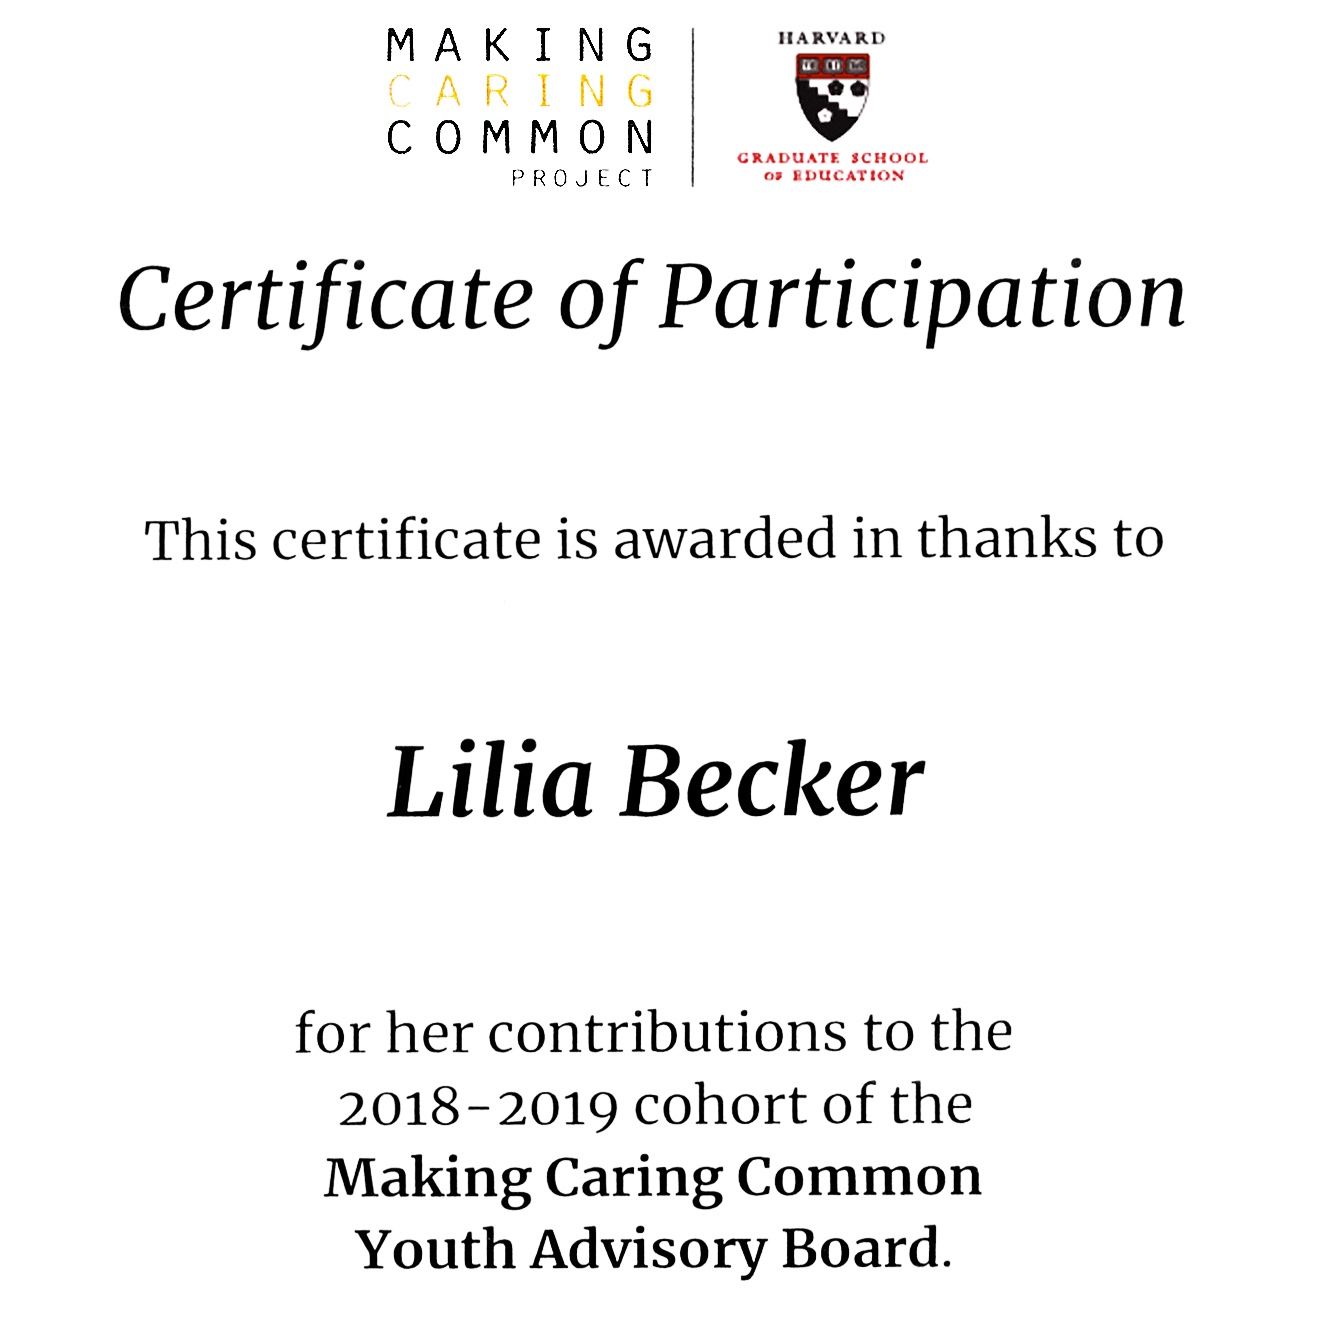 caring common certificate.jpg